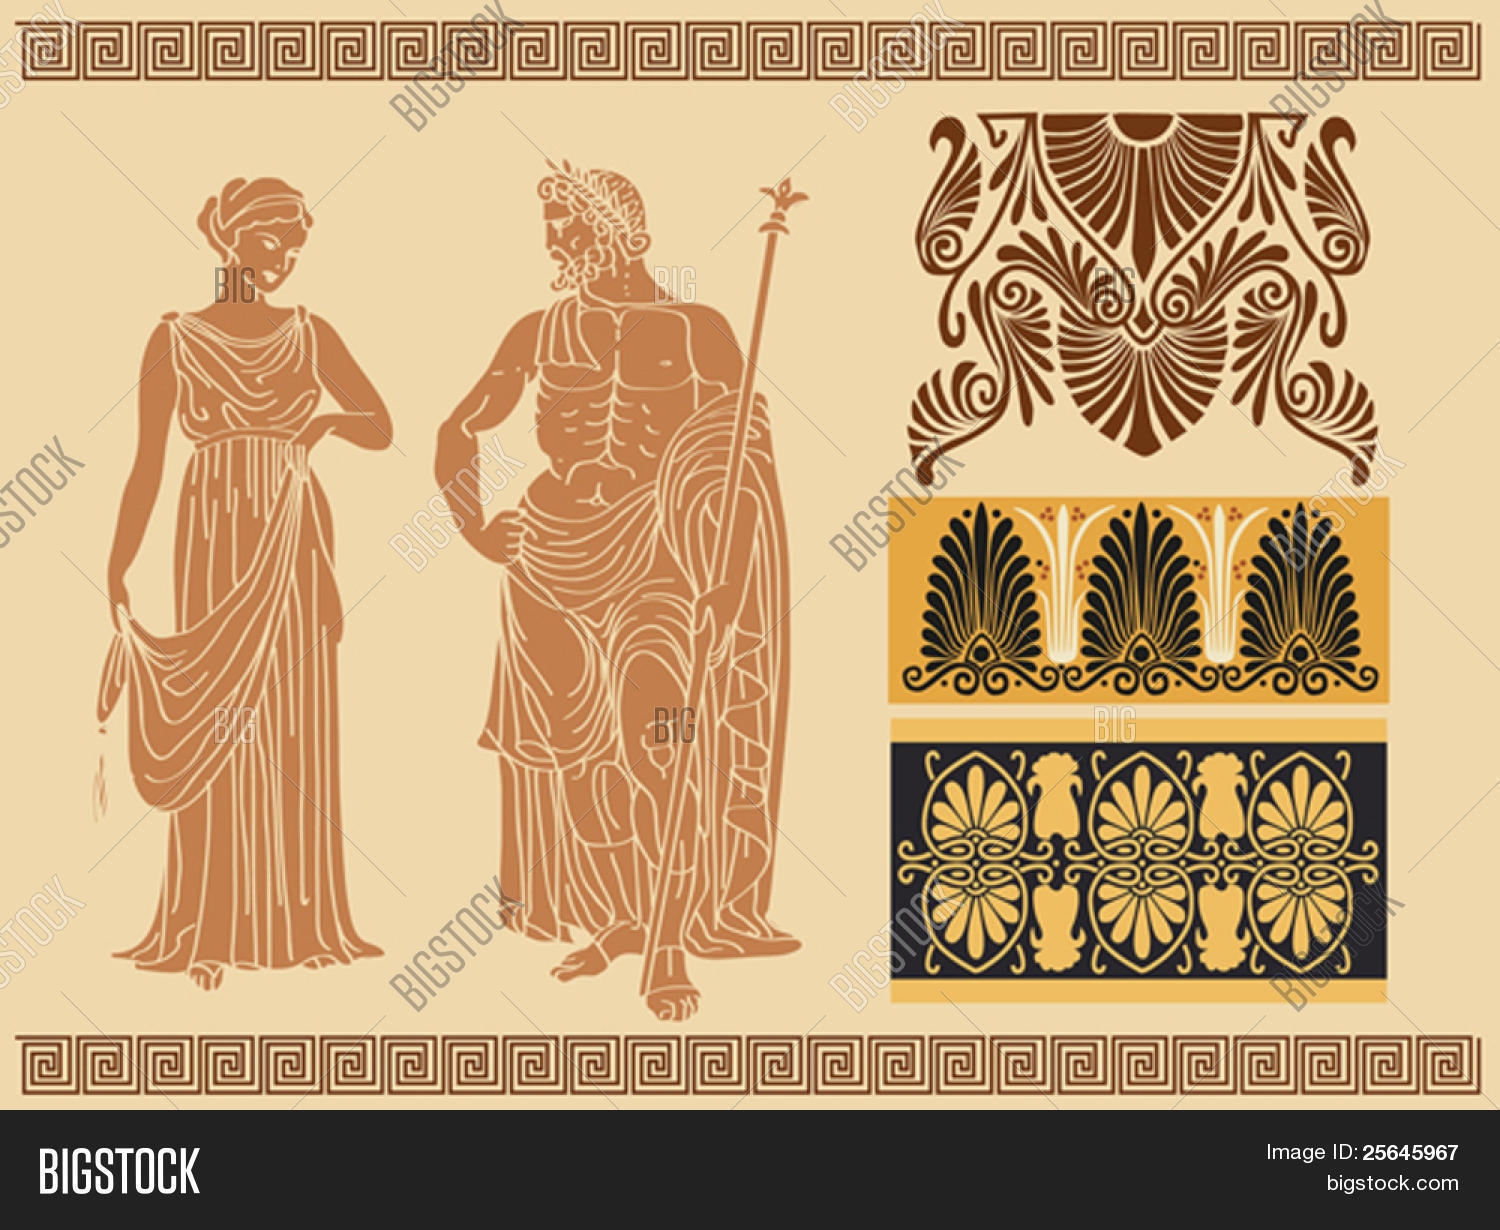 Орнамент в стиле древней Греции